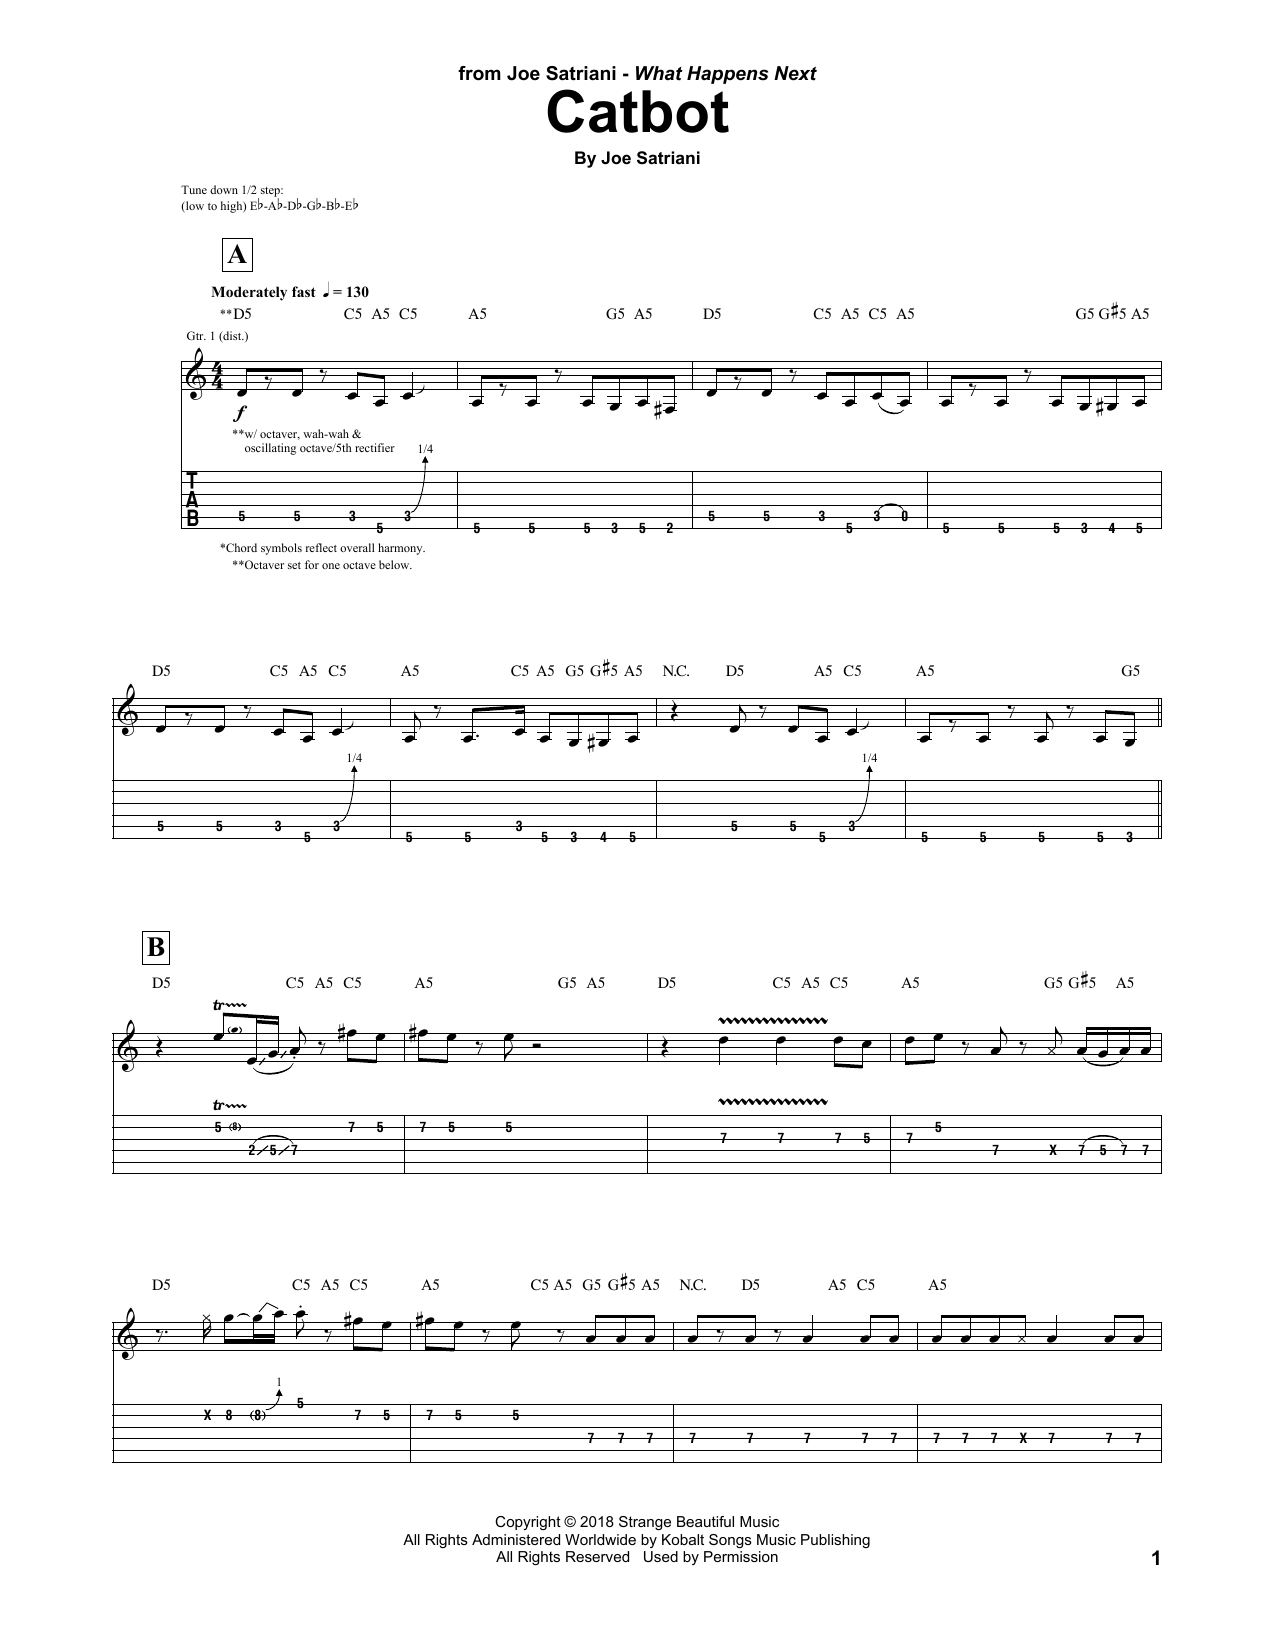 Joe Satriani Catbot Sheet Music Notes & Chords for Guitar Tab - Download or Print PDF